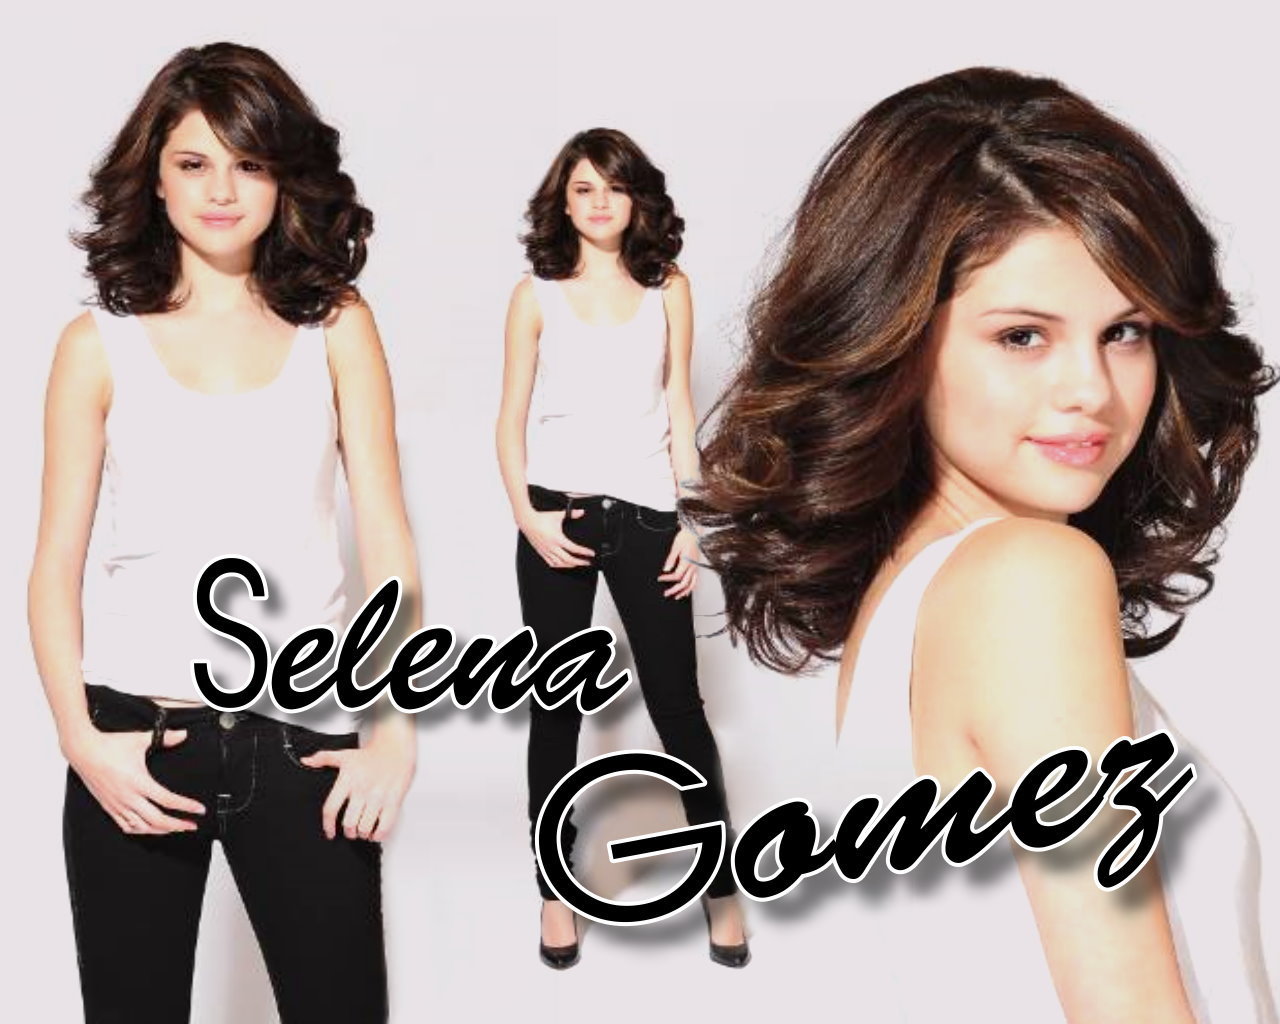 Selena Gomez Hot Pictures Wallpapers